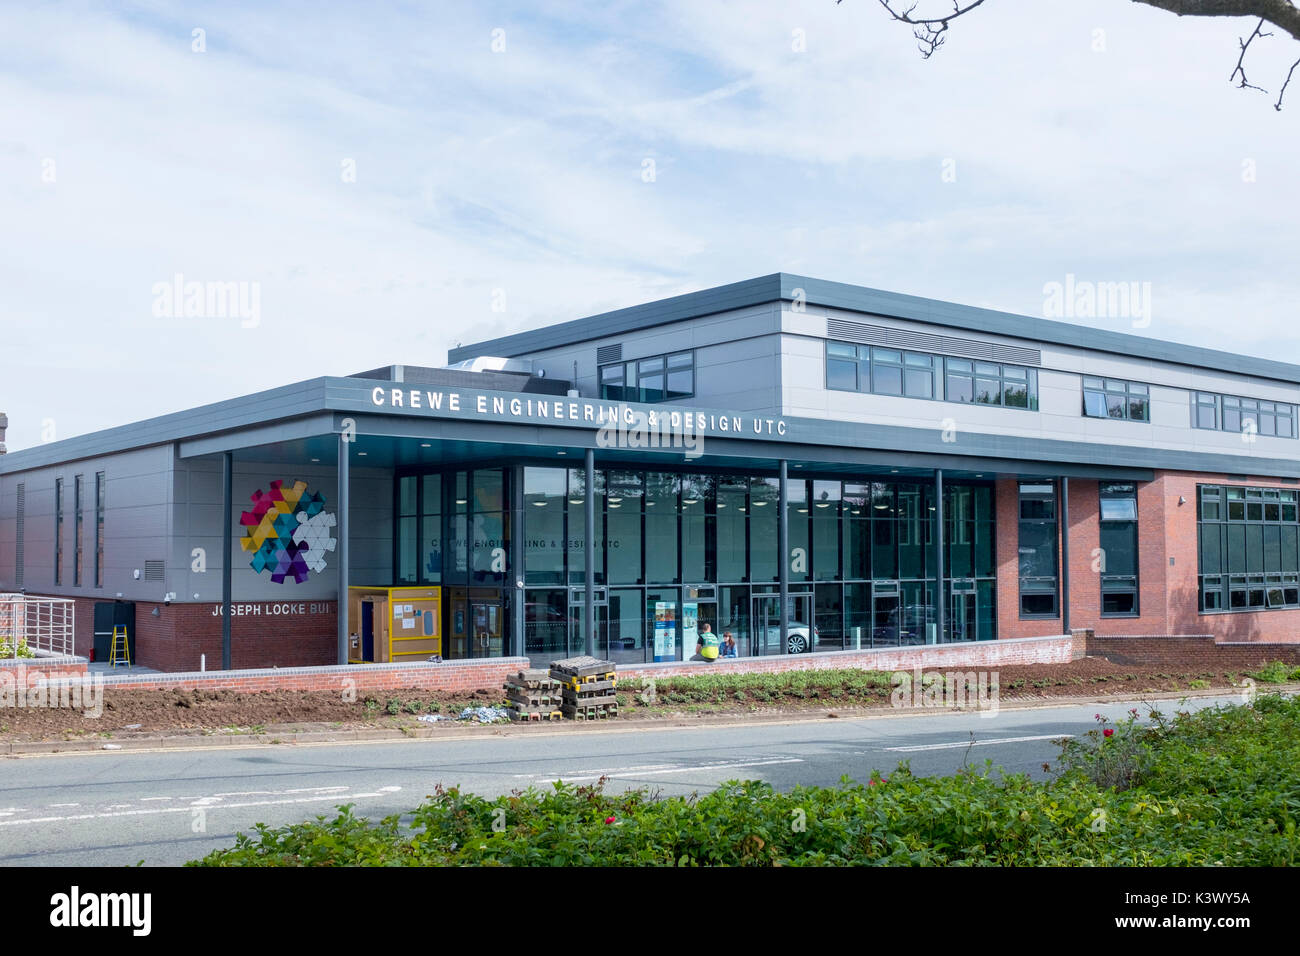 Crewe Engineering & Design UTC Joseph Locke Gebäude in Crewe, Cheshire Vereinigtes Königreich Stockfoto